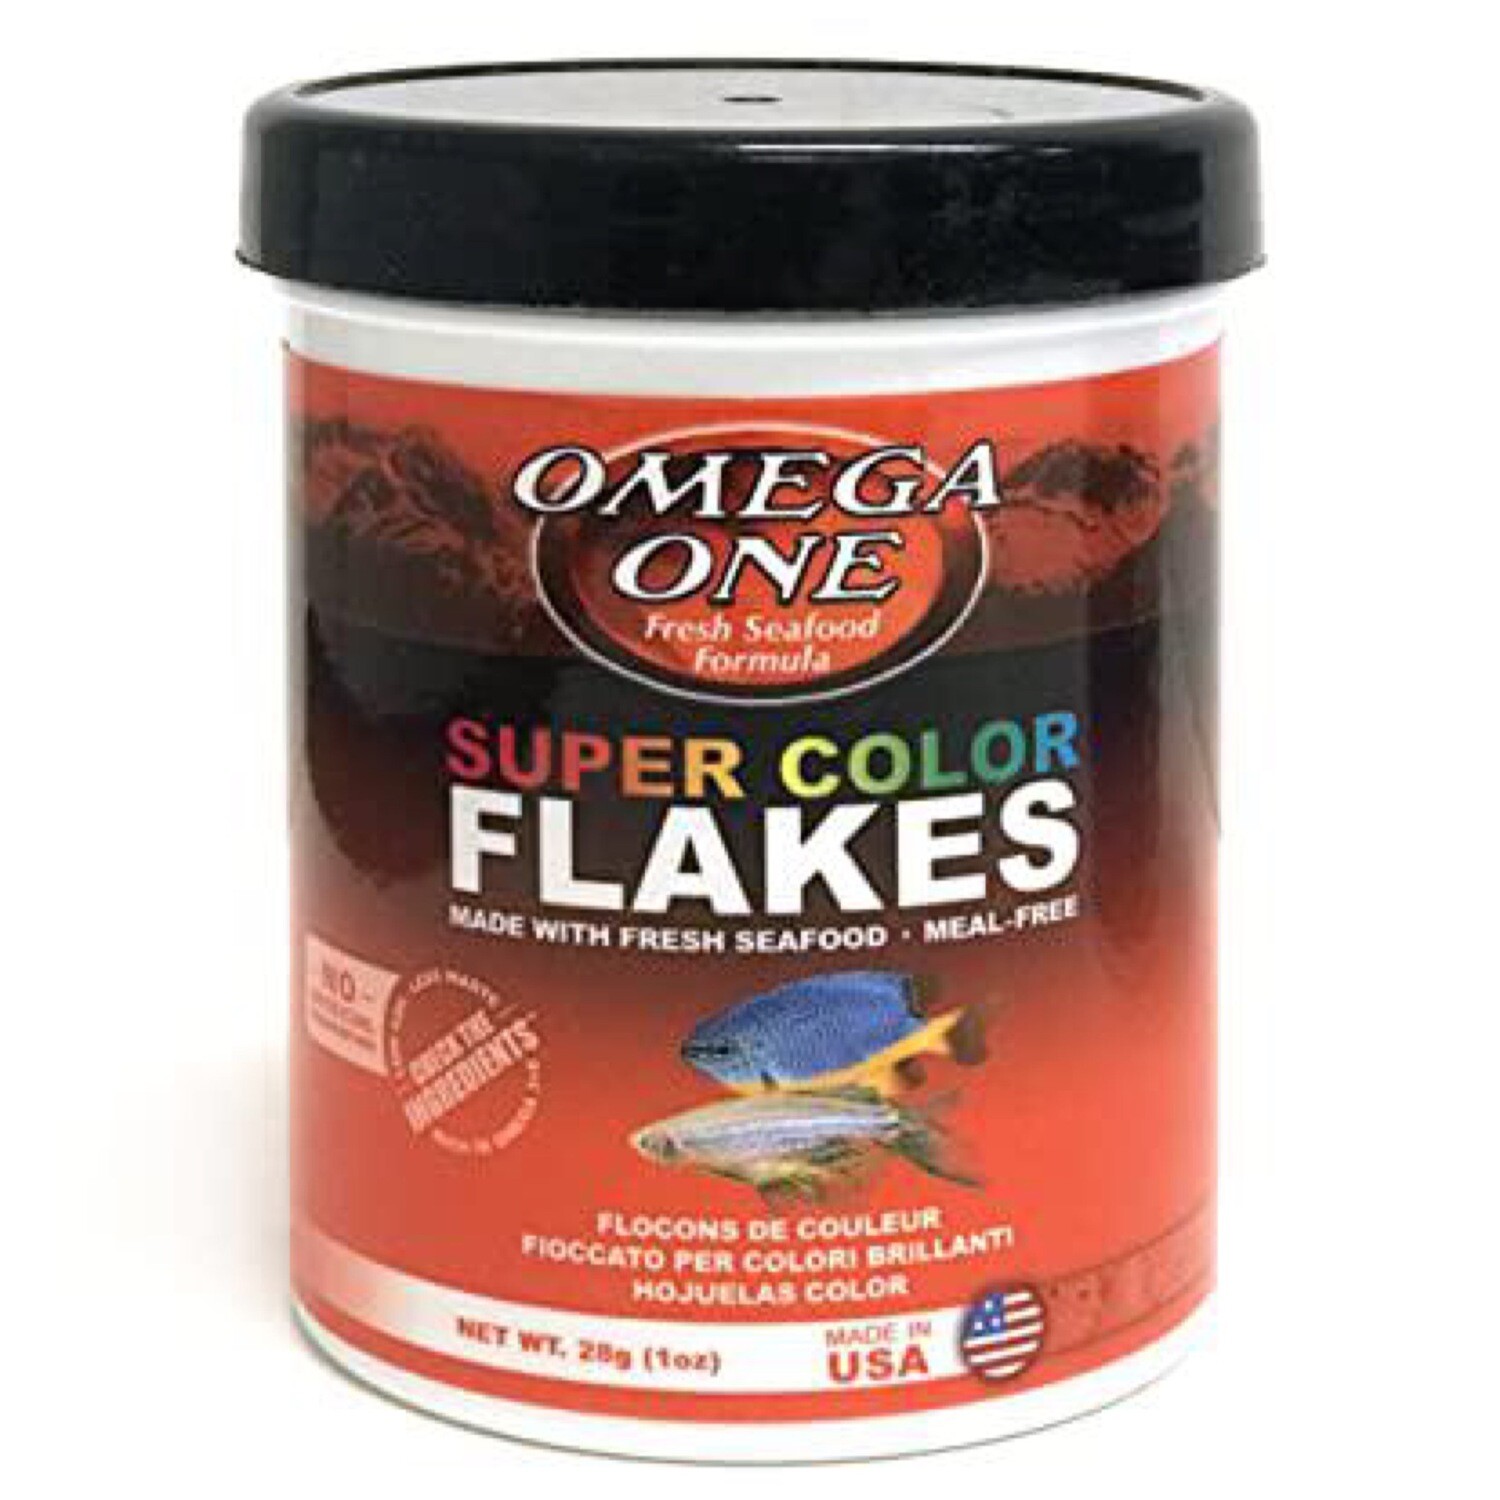 Omega One Super Color Flakes